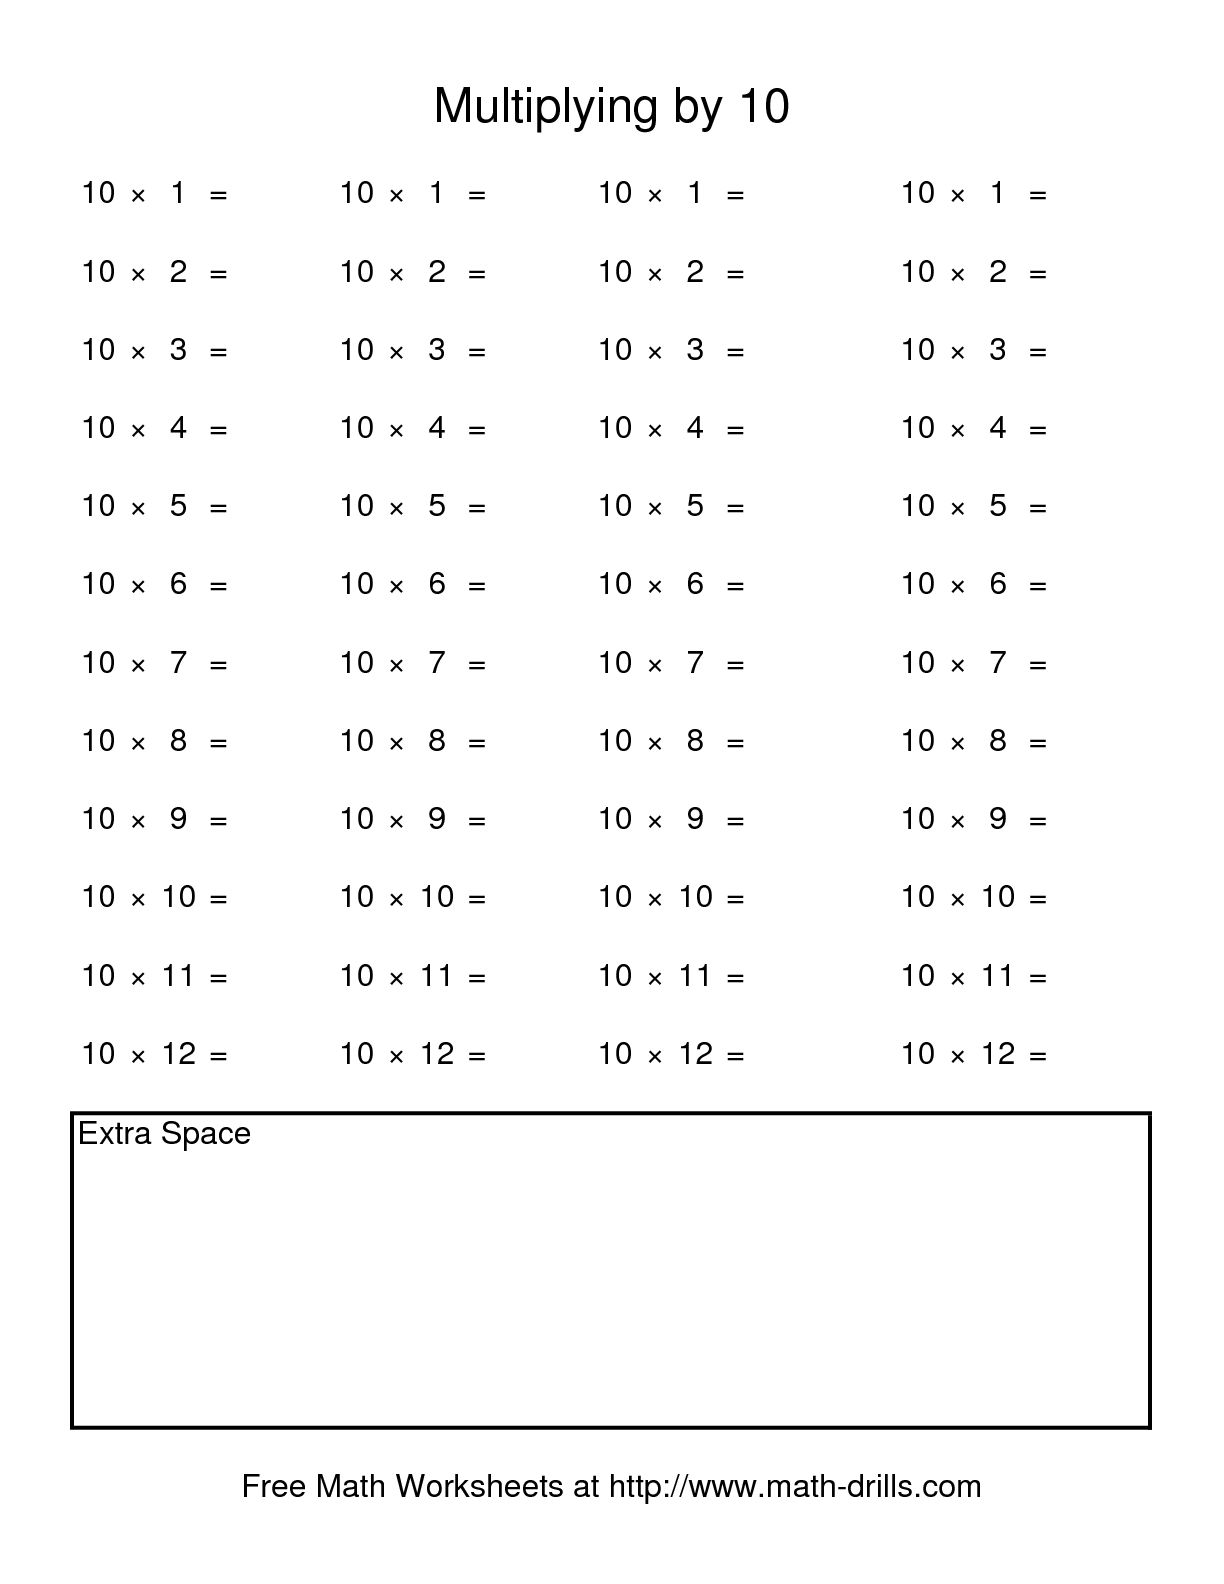 15-best-images-of-multiplication-by-10-worksheet-multiplication